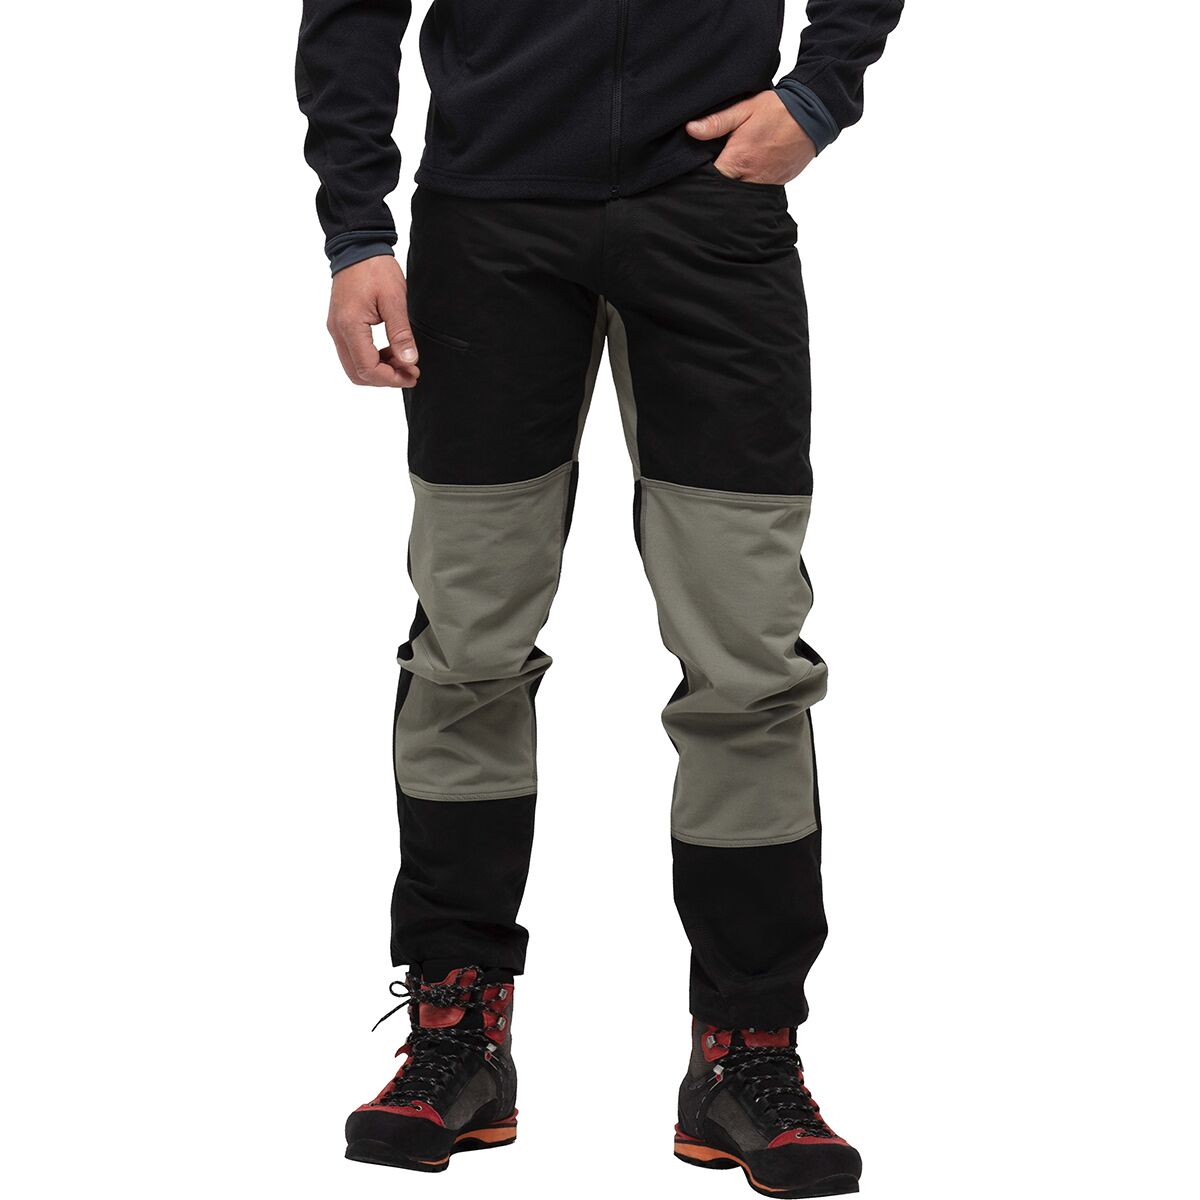 Buy Norrøna Svalbard Light Cotton Pants online at Sport Conrad